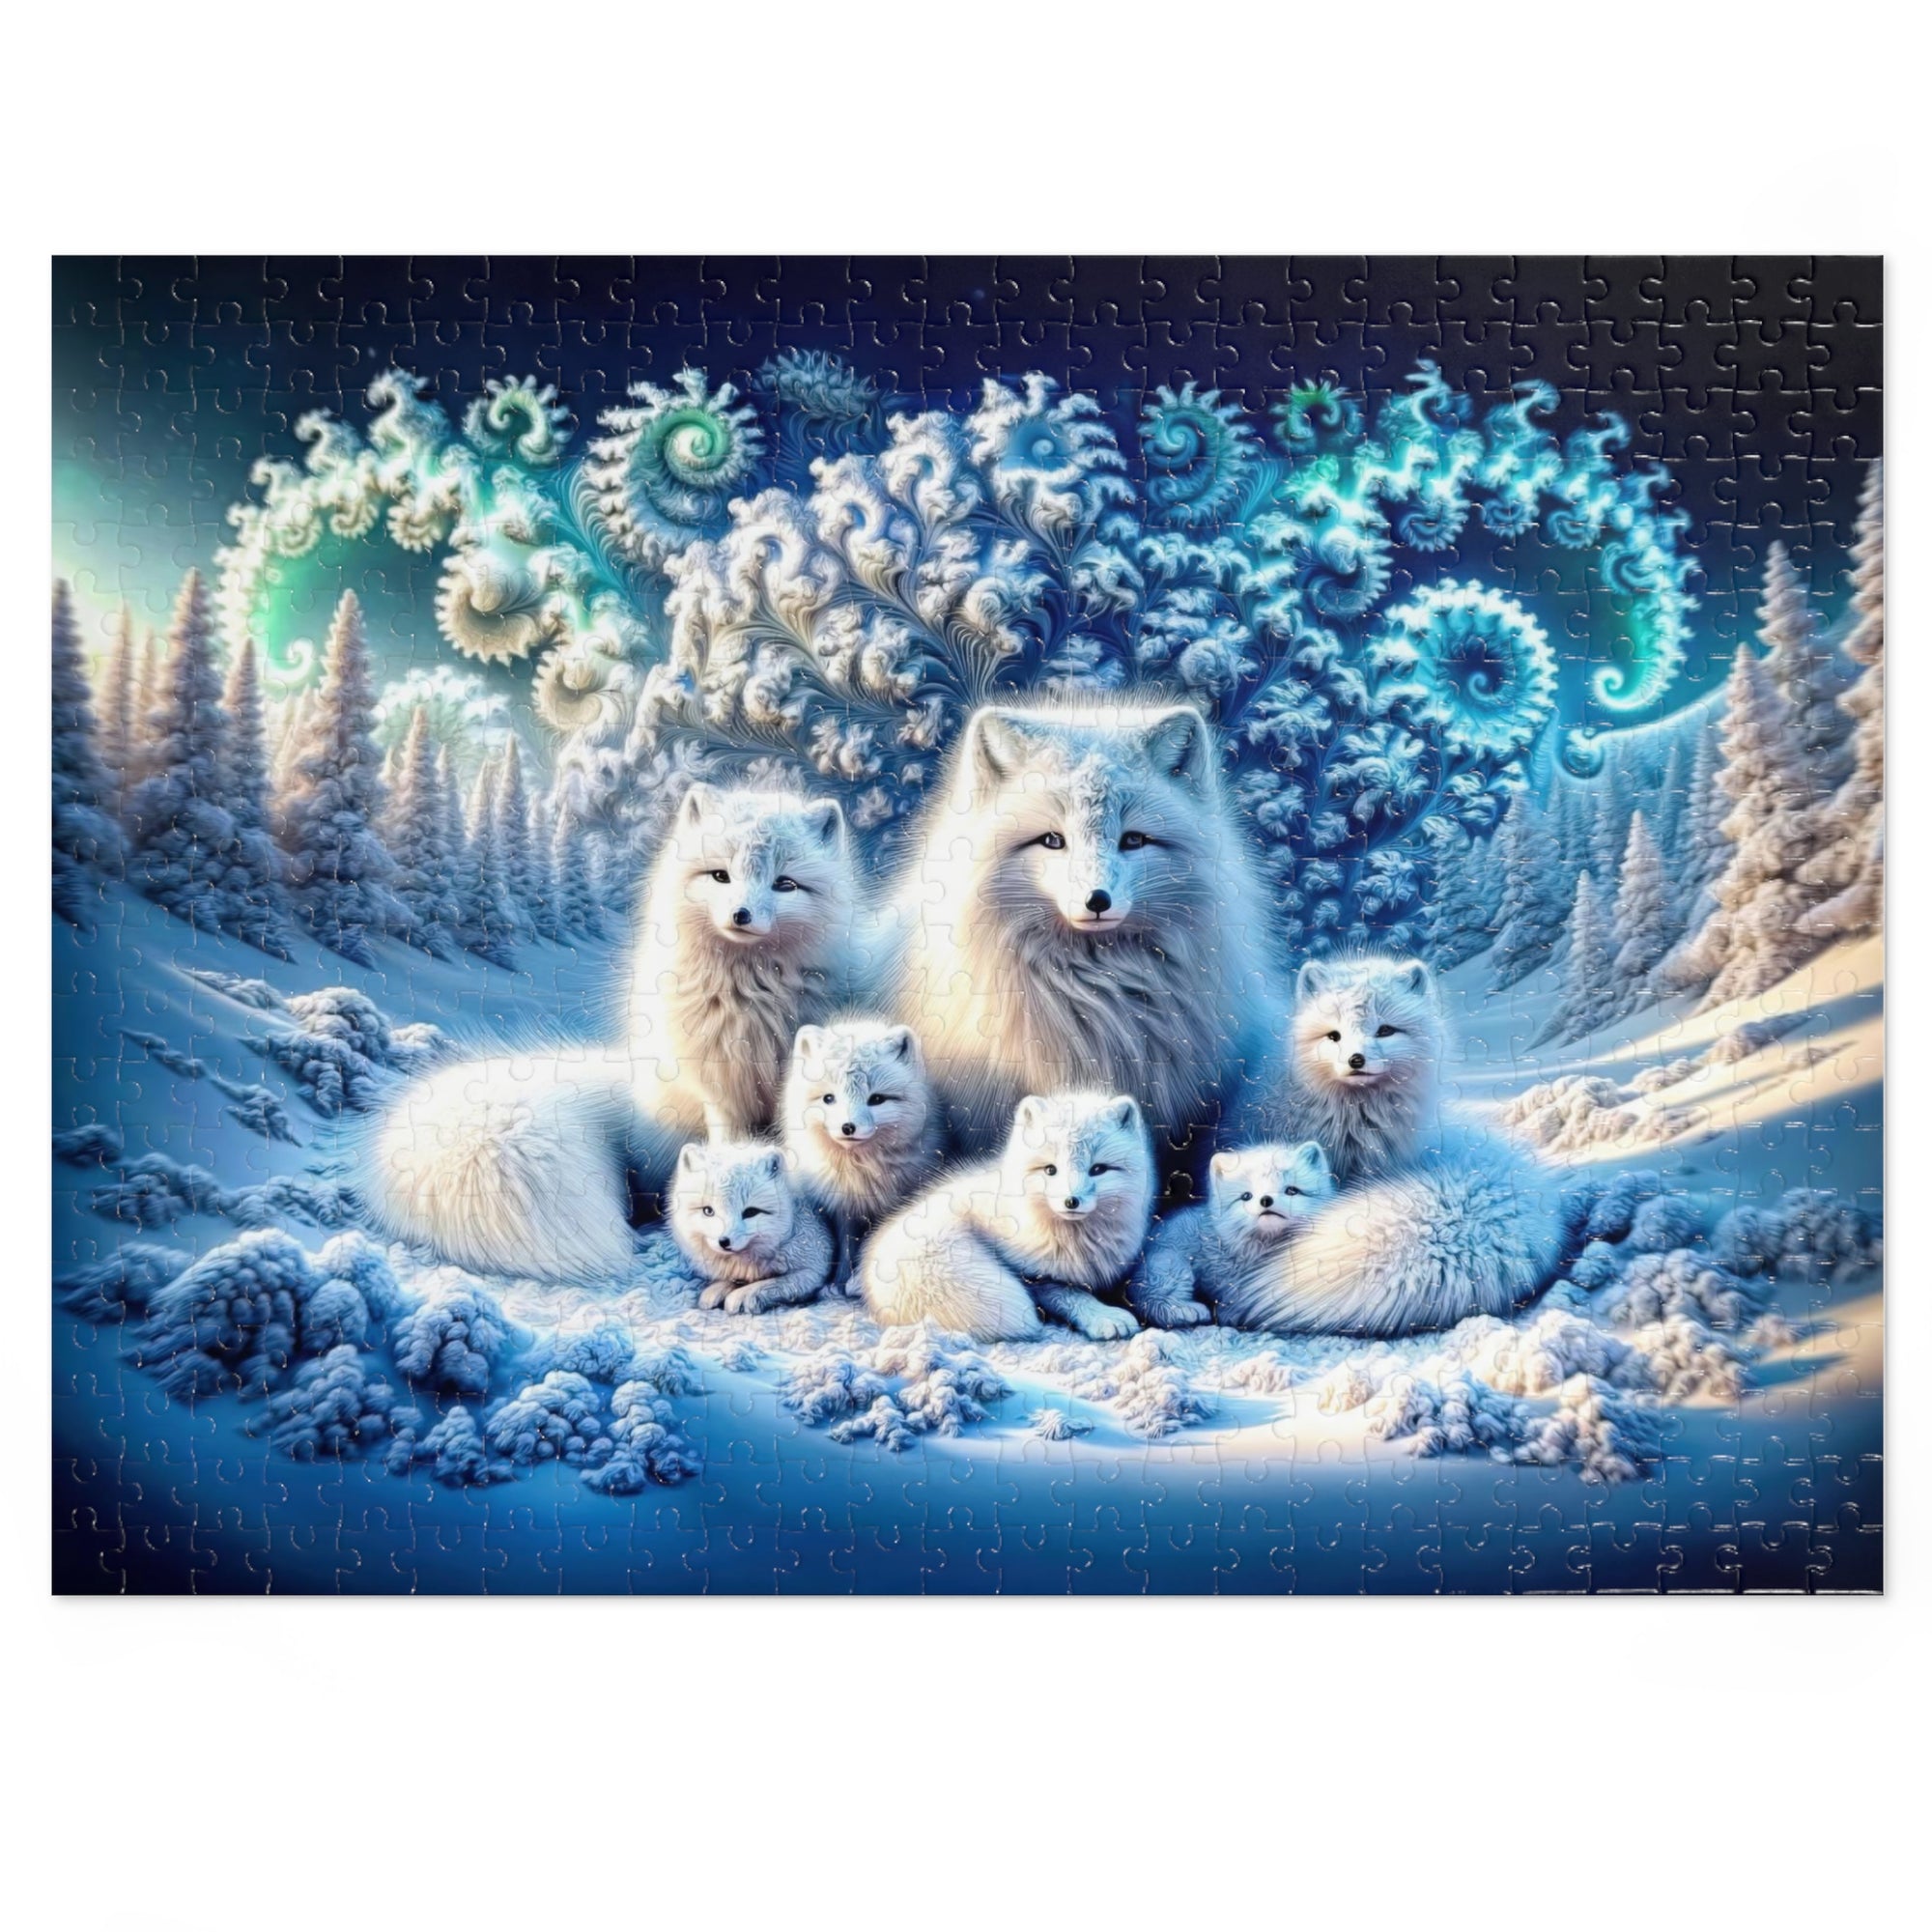 The Silent Saga of Snow Foxe Puzzle